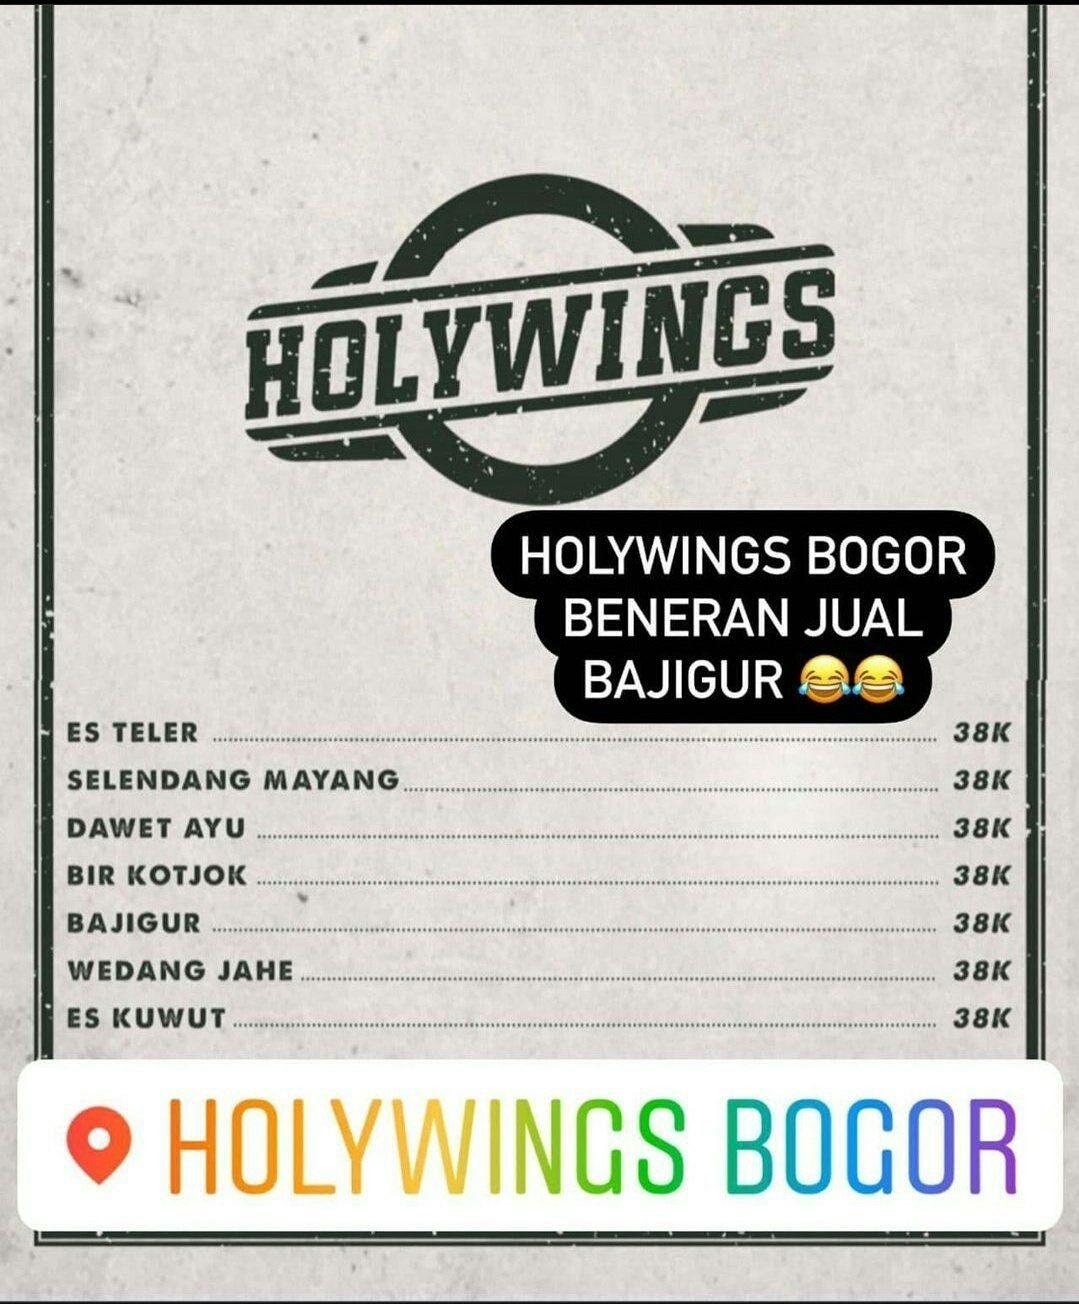 Holywings Bogor